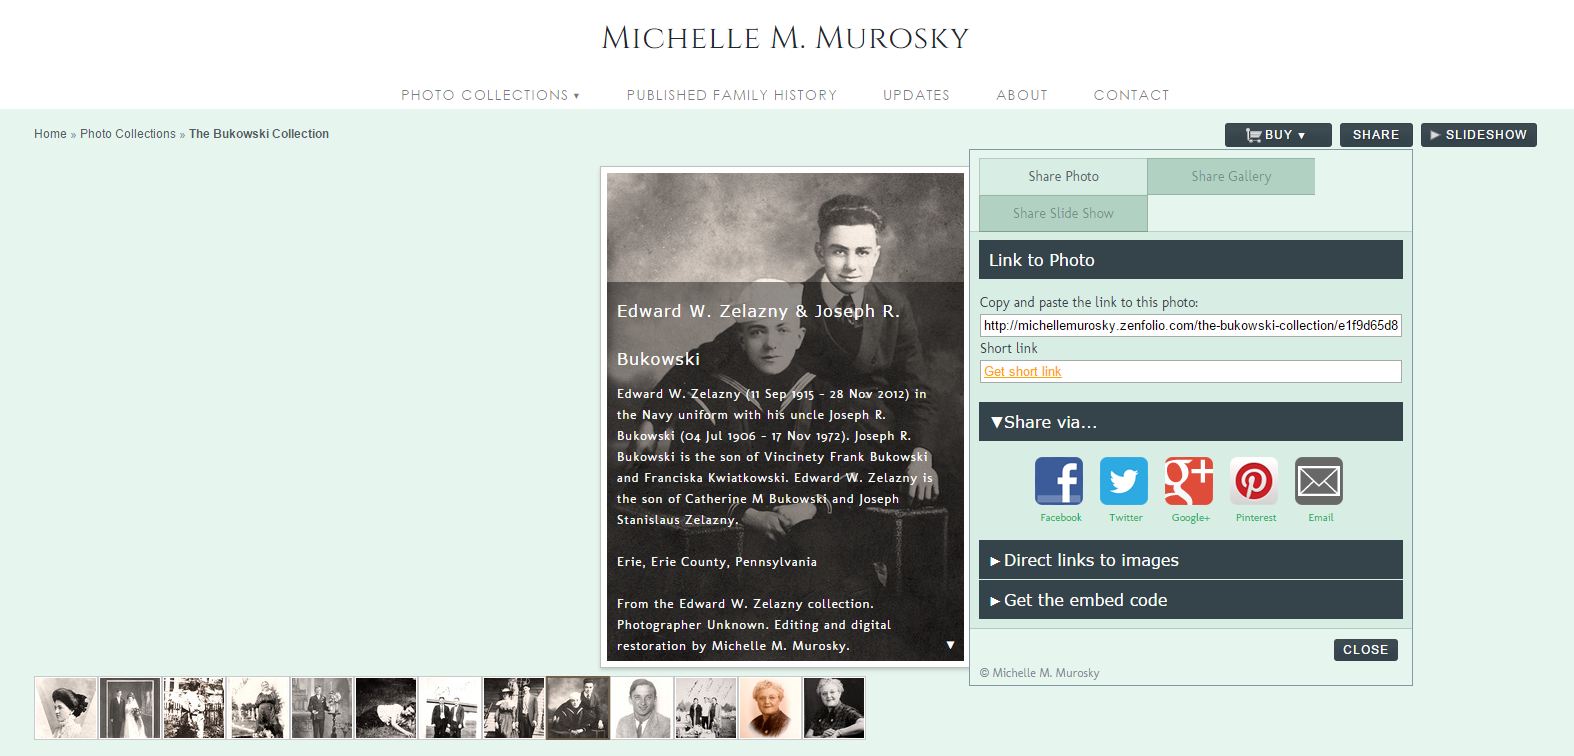 Michelle M. Murosky: Blog Images &emdash; Share